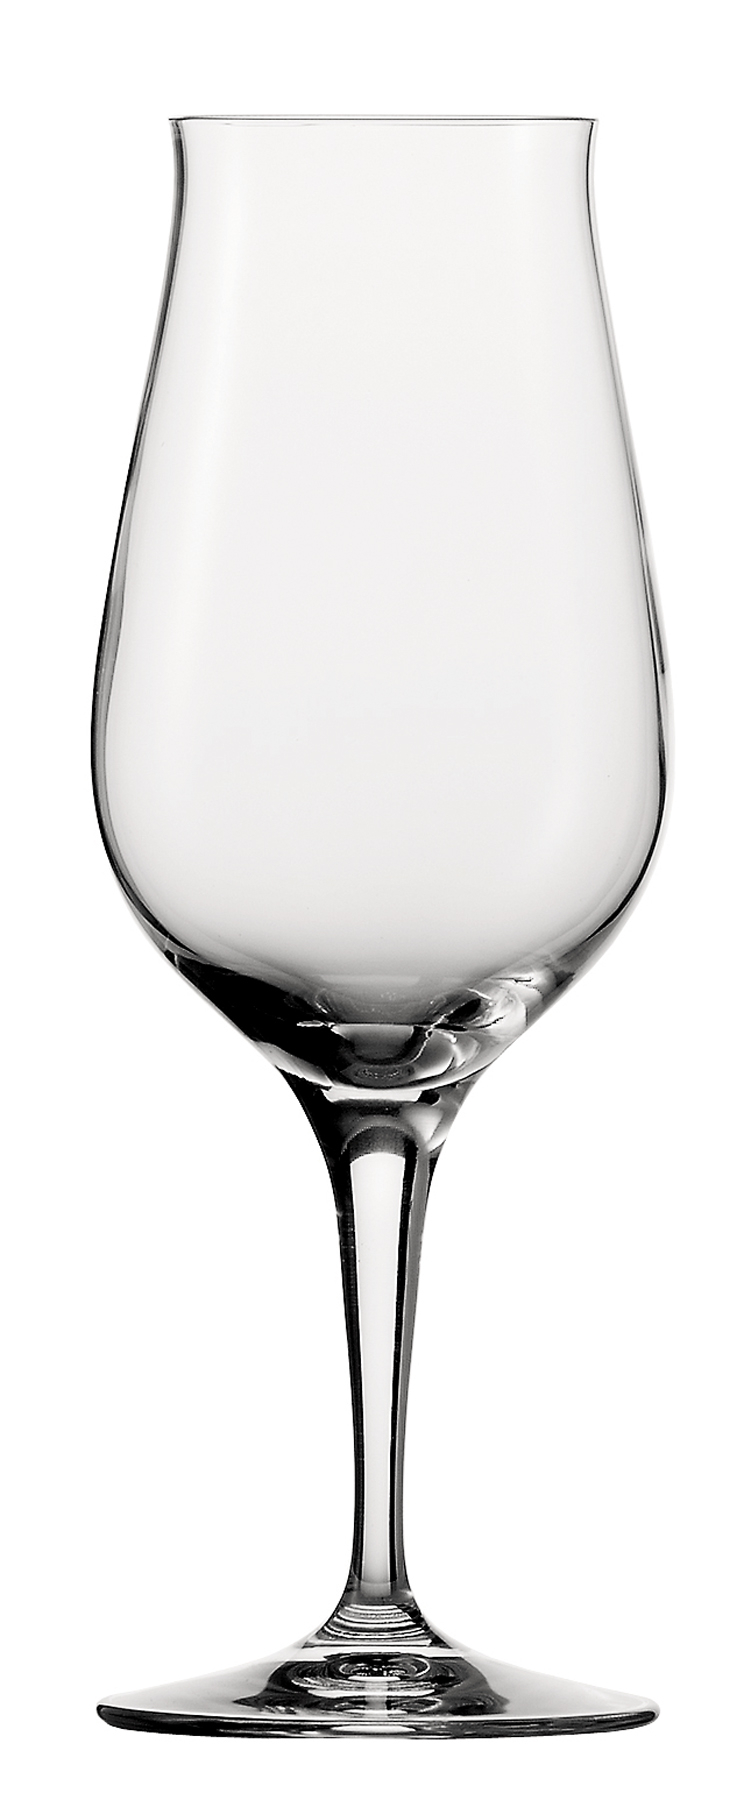 Whisky Snifter Premium, Spiegelau Special Glasses - 280 ml